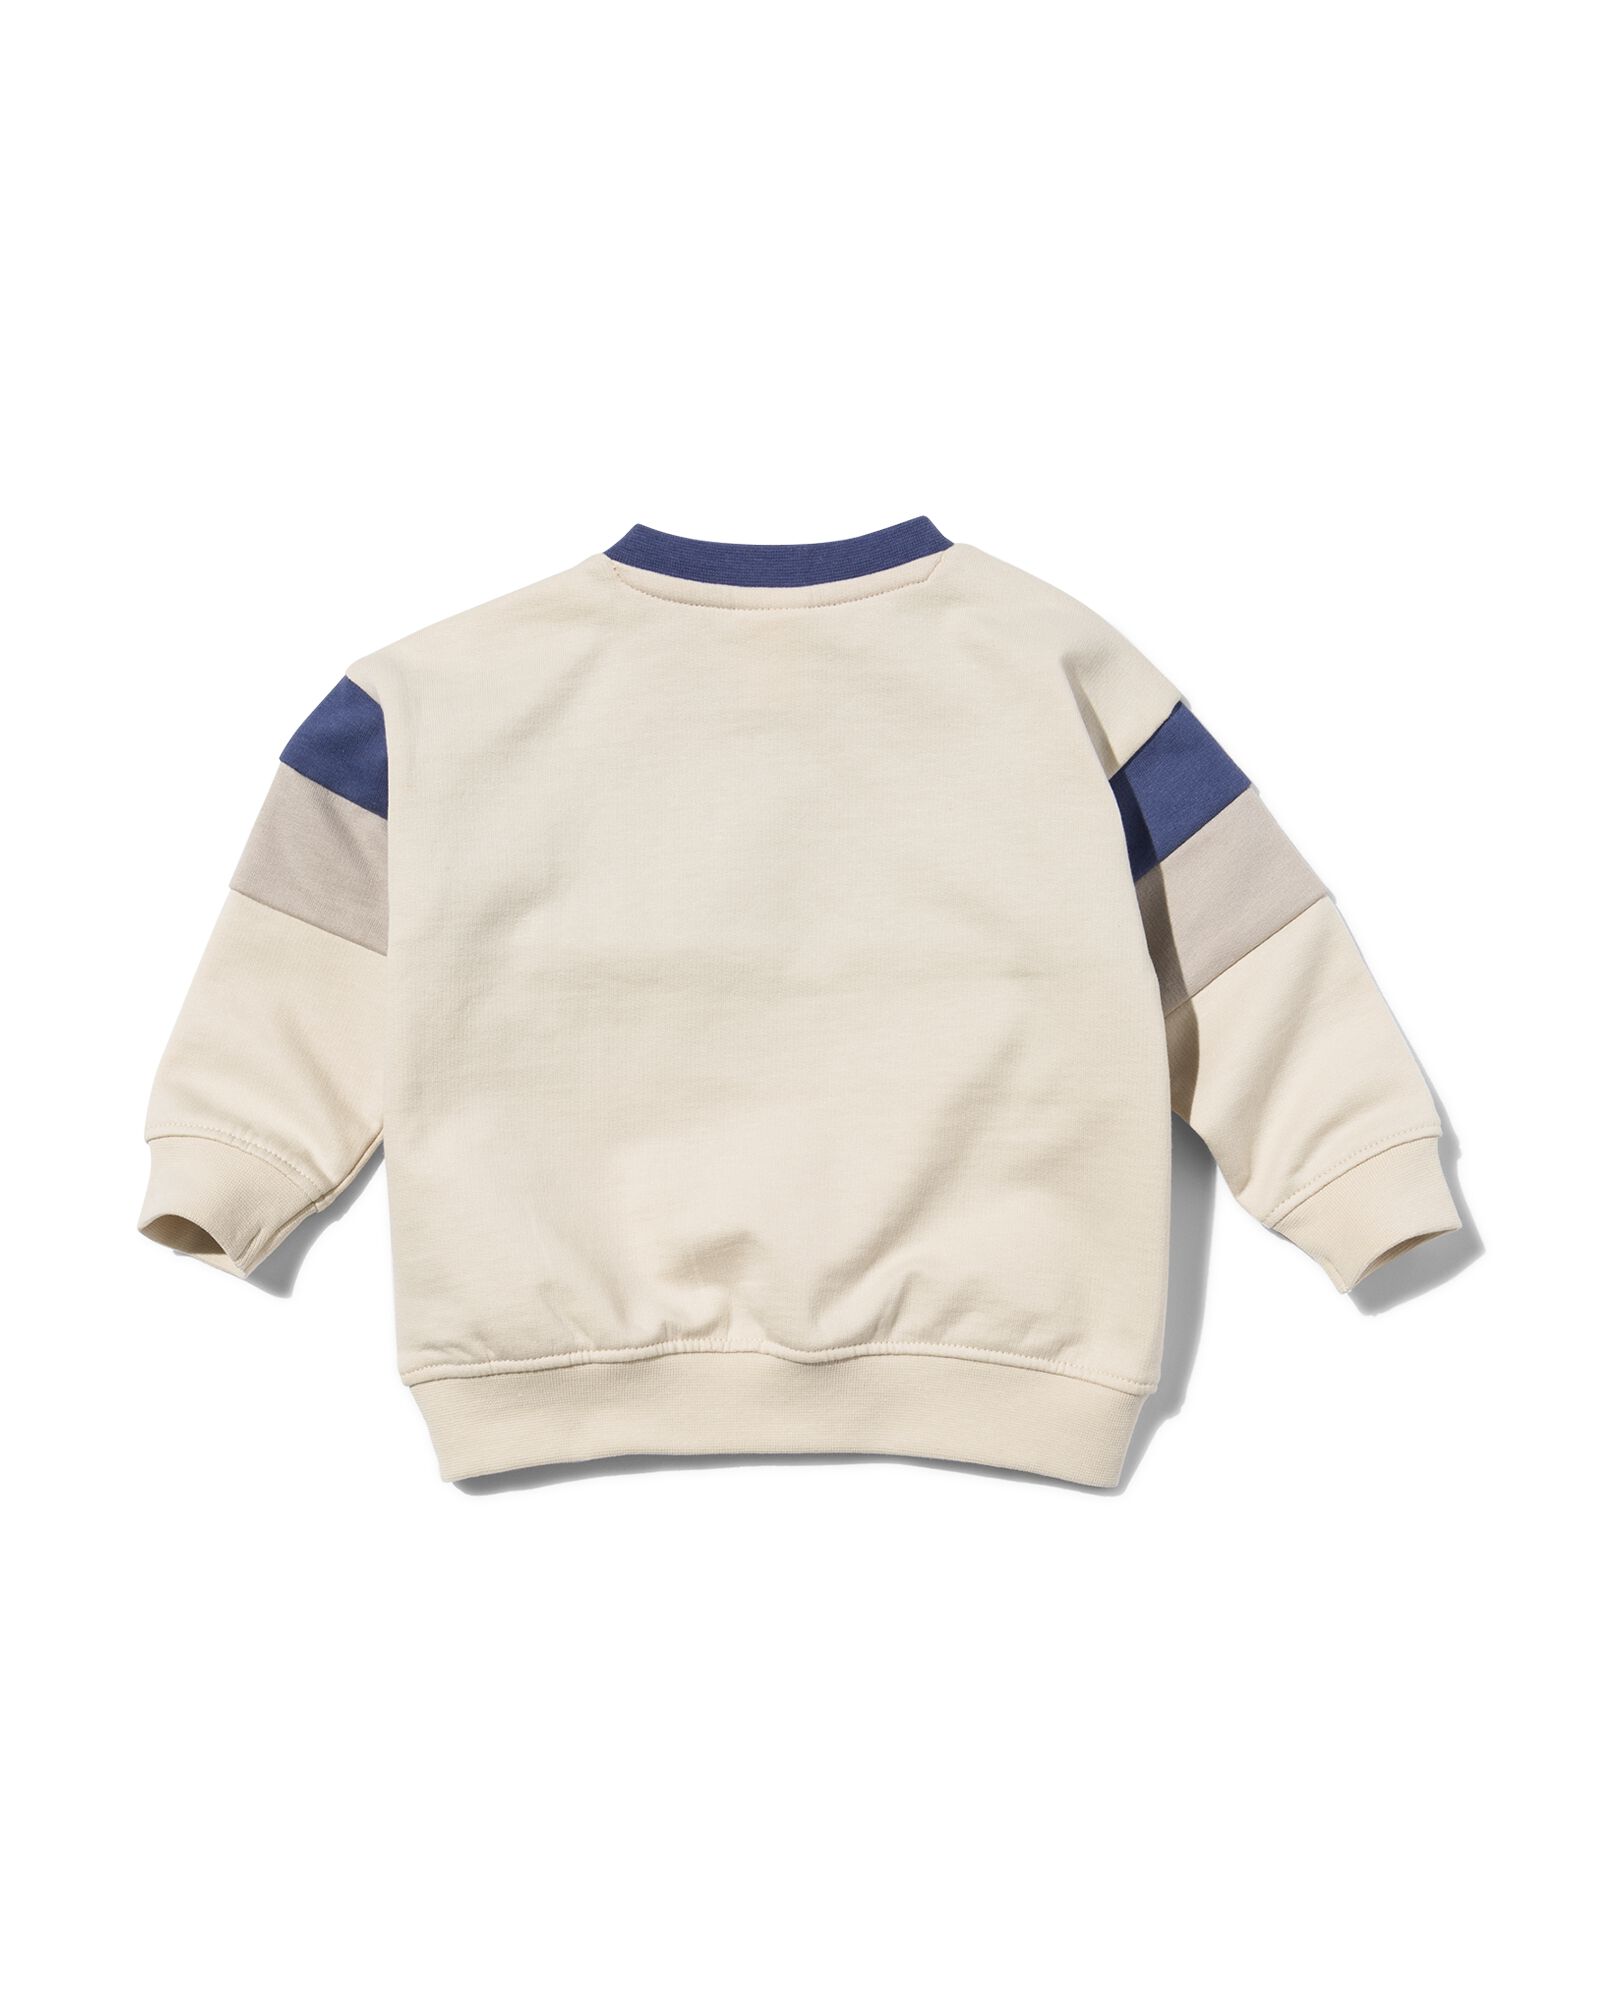 baby kledingset sweatbroek en sweater kleurblokken blauw - 1000029763 - HEMA